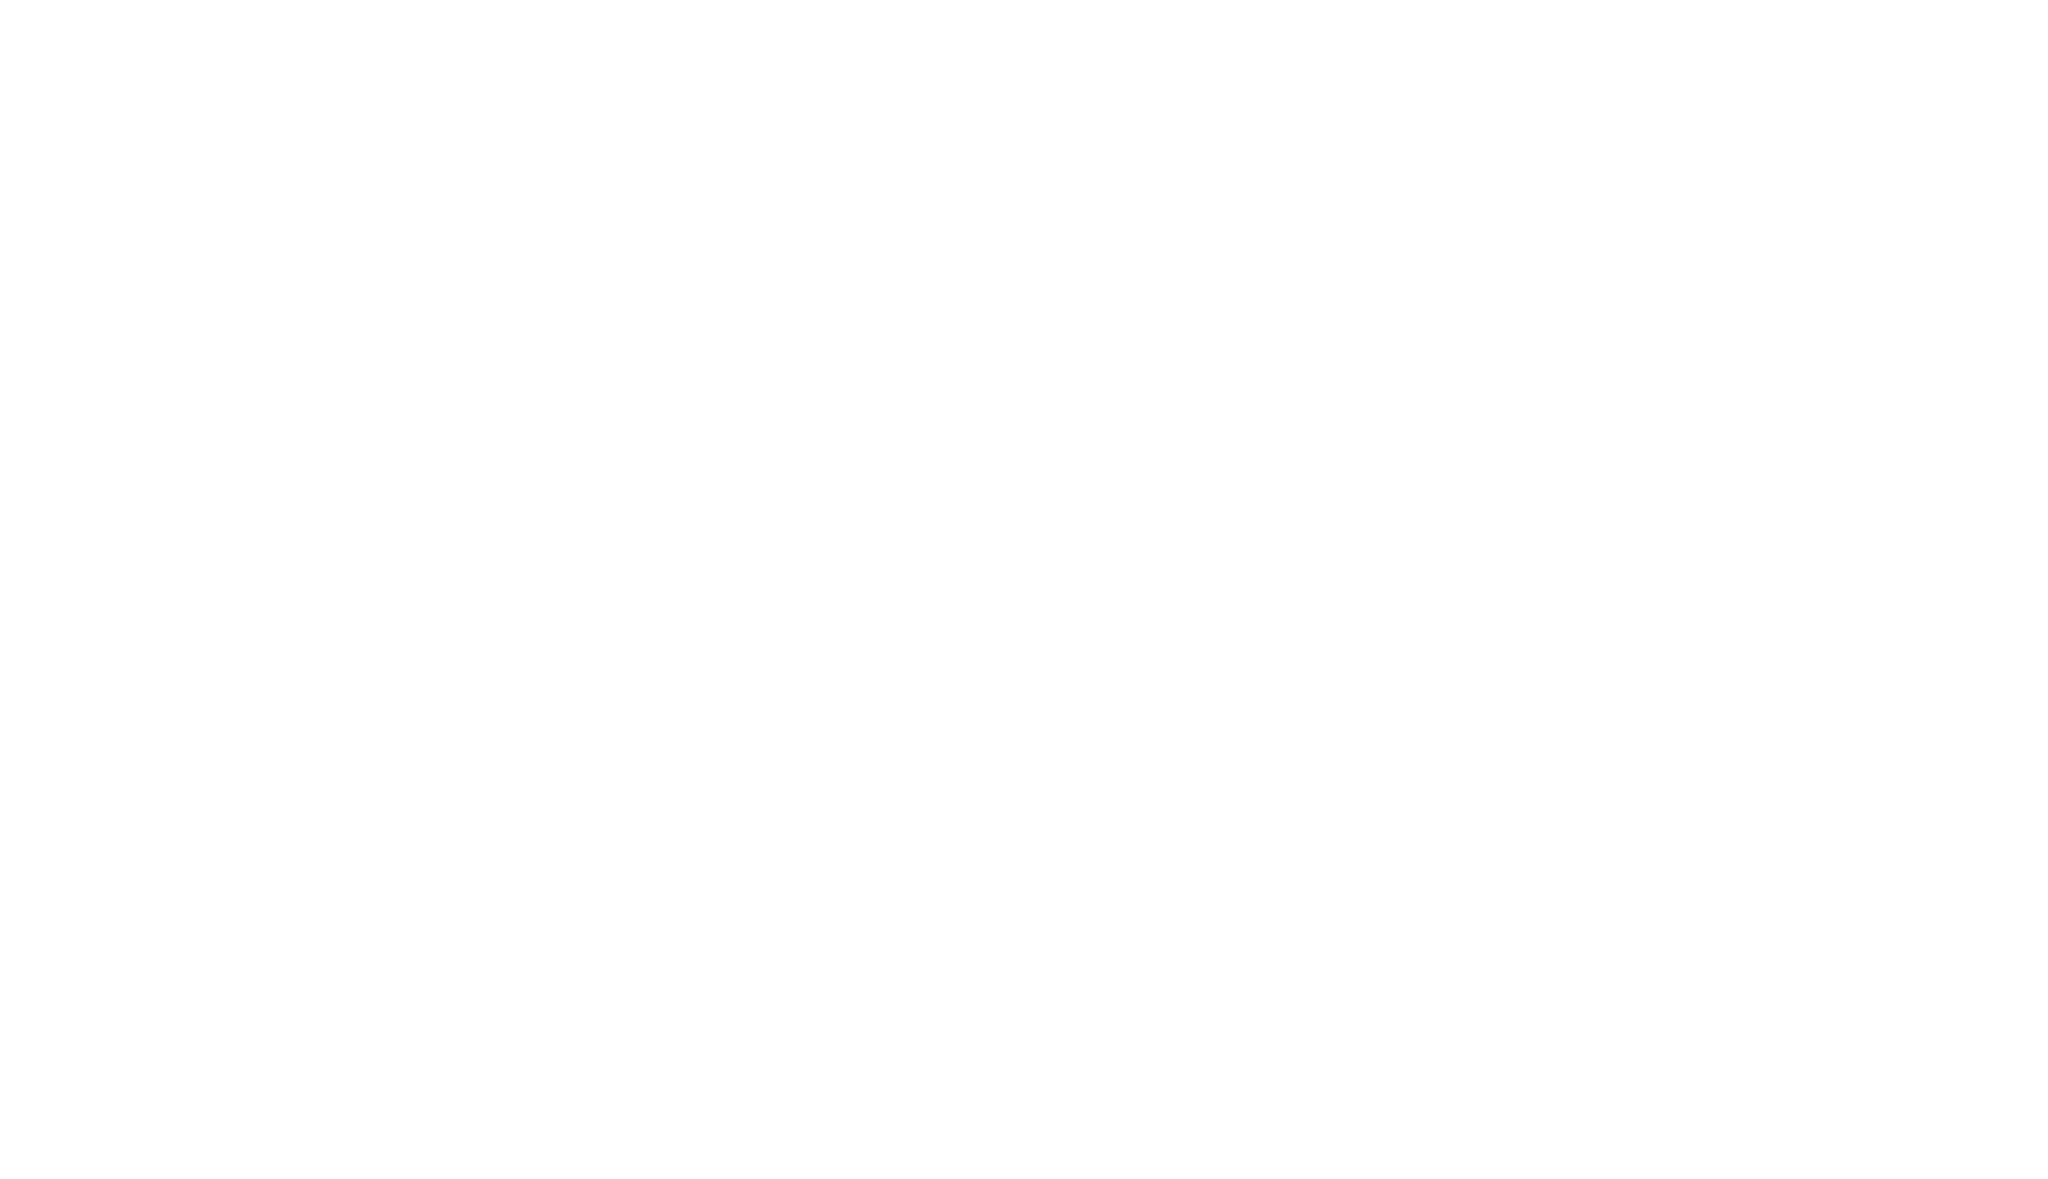 Emendo-logo-valkoinen-uusi